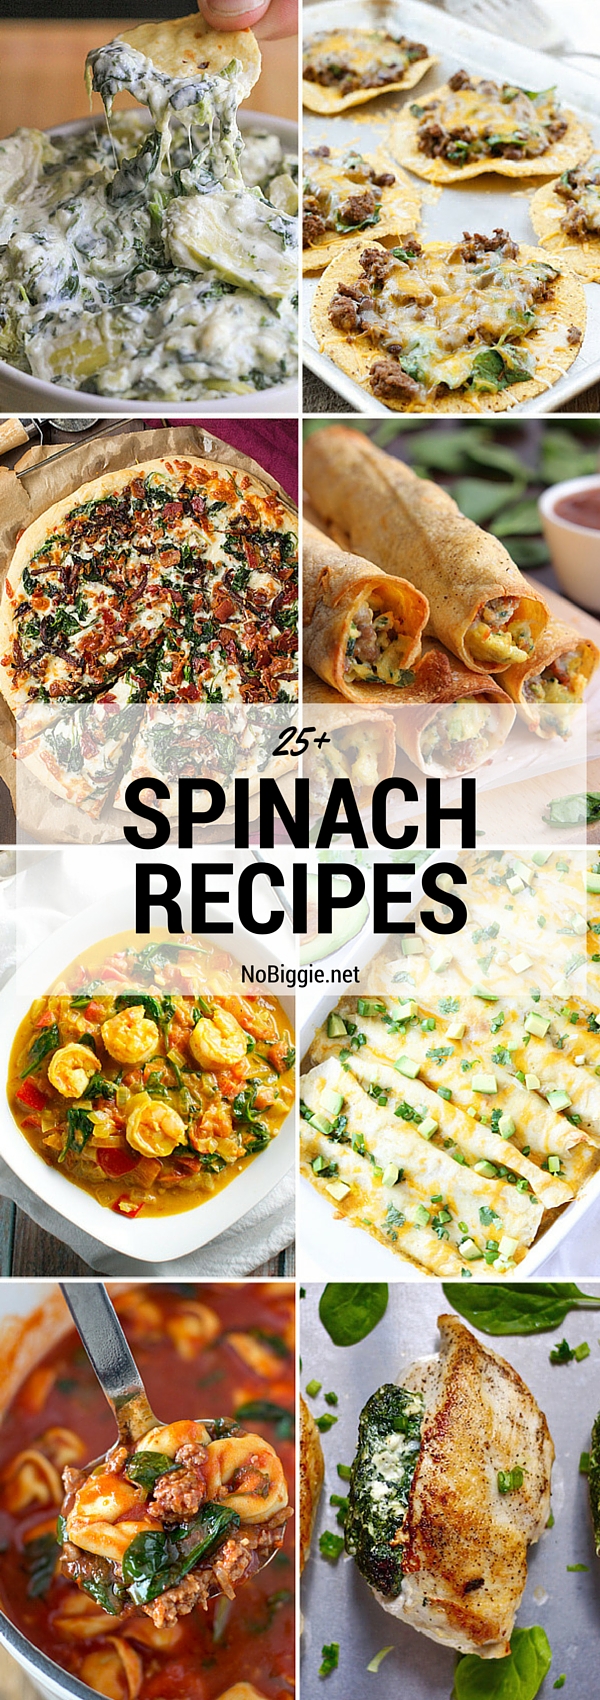 25+ Spinach Recipes | NoBiggie.net